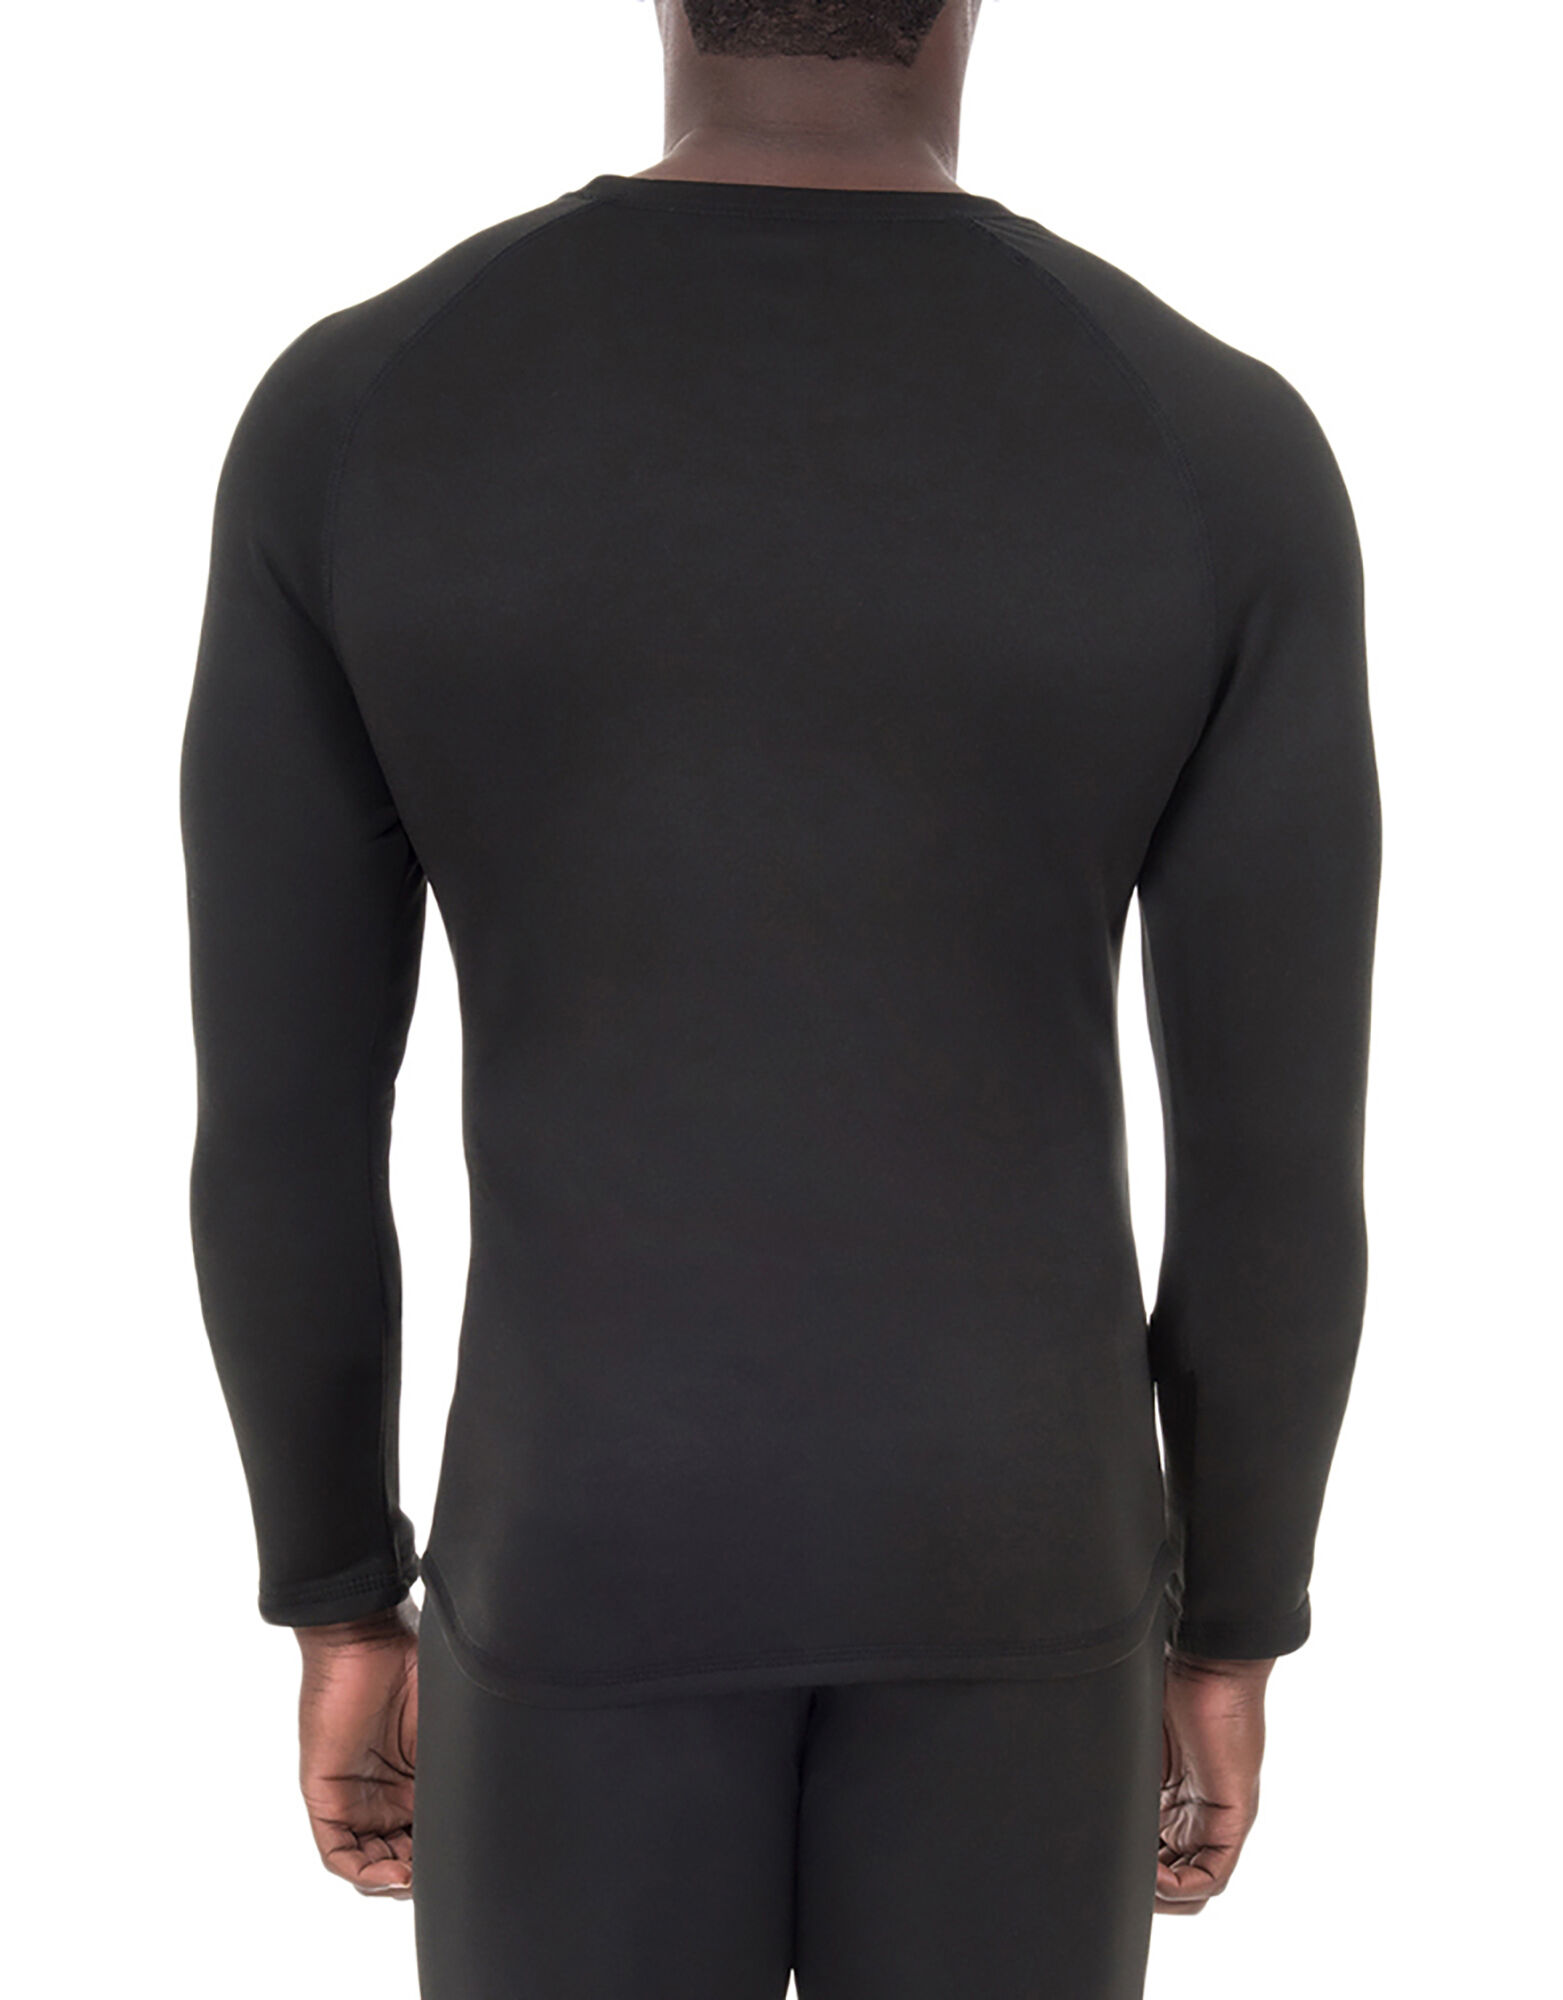 Men's Heavyweight Performance Fleece Work Thermal Shirt w/ Odor Control ...